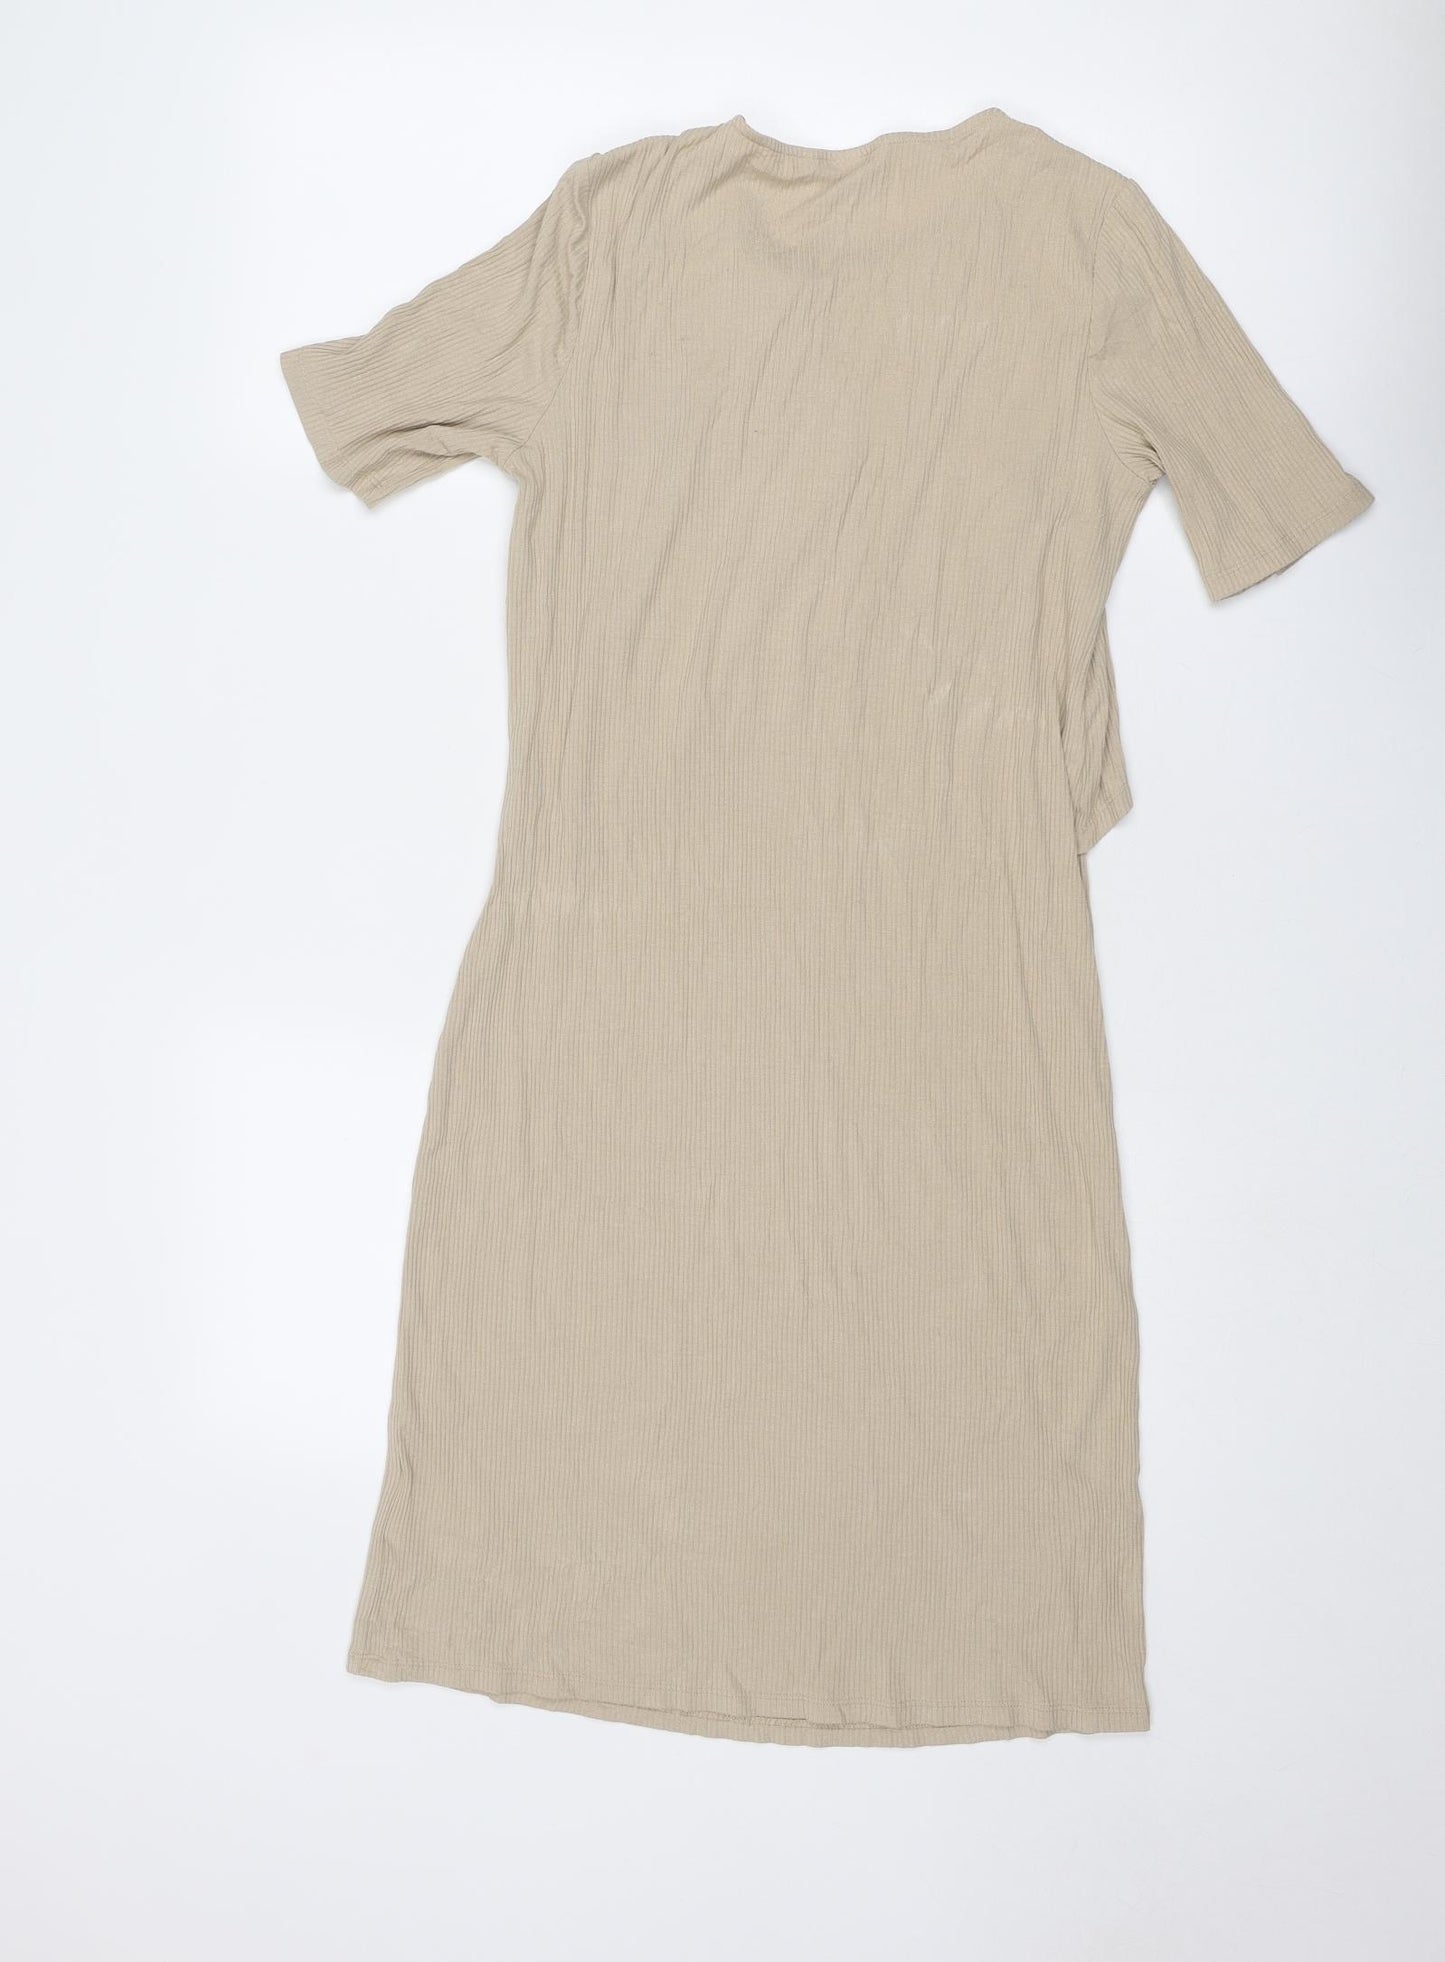 H&M Womens Beige Viscose T-Shirt Dress Size S Round Neck Pullover